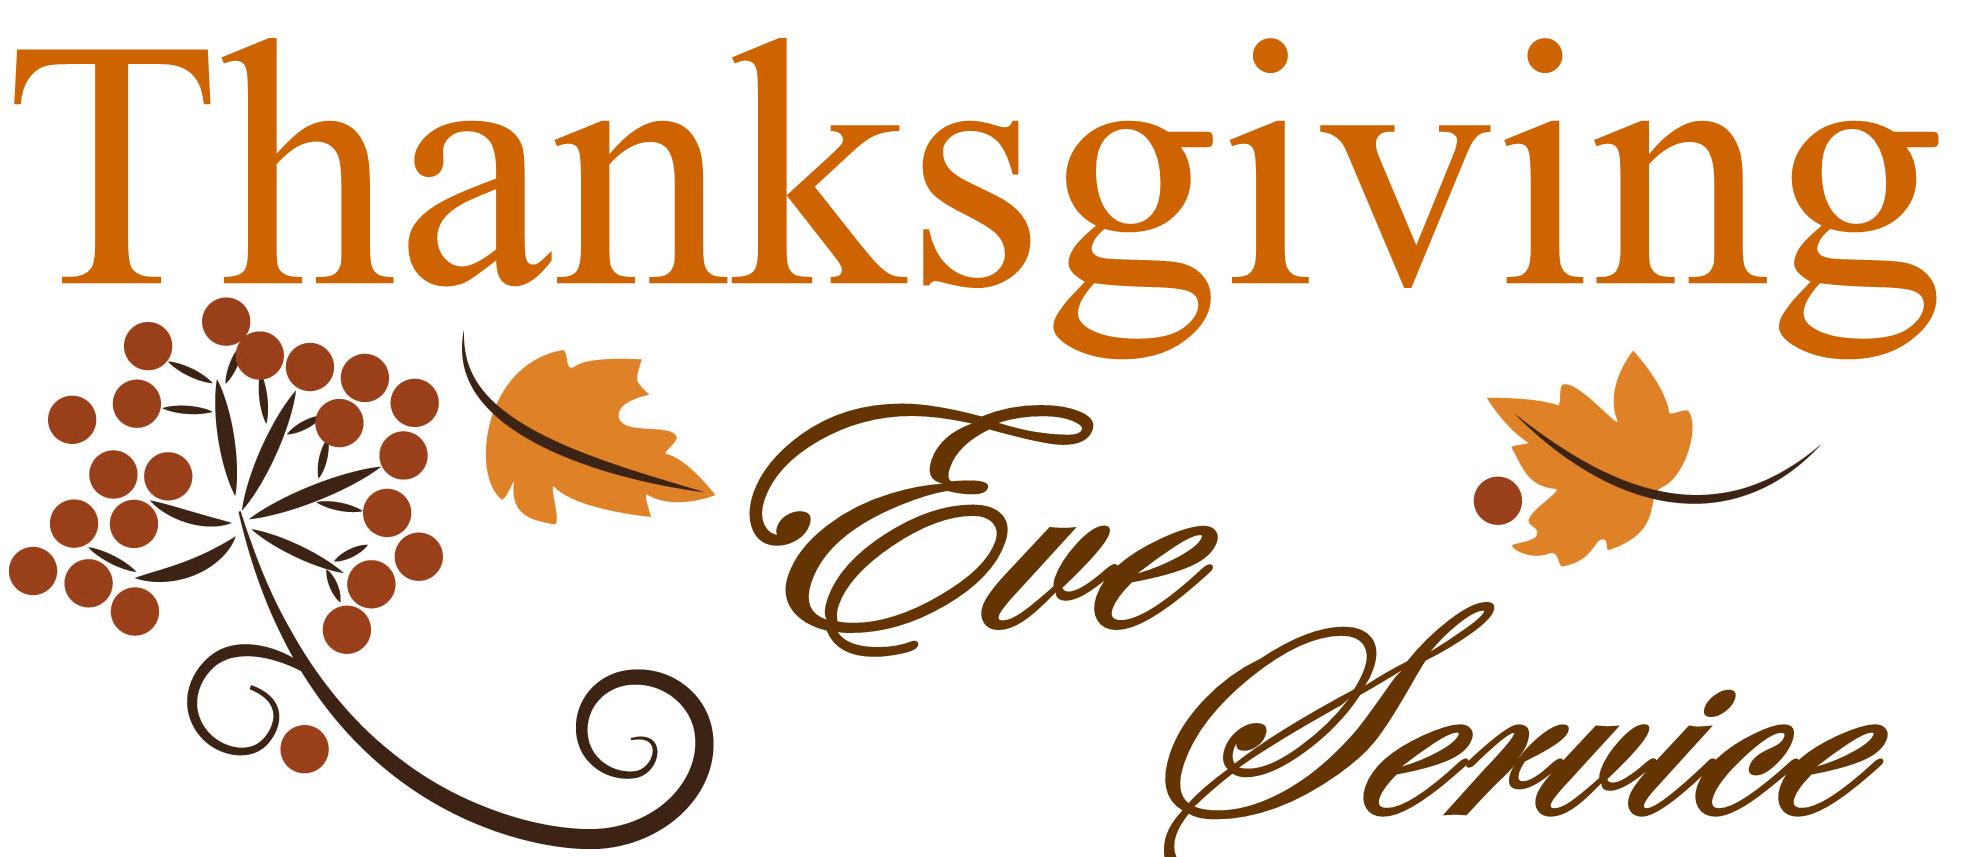 thanksgiving eve service